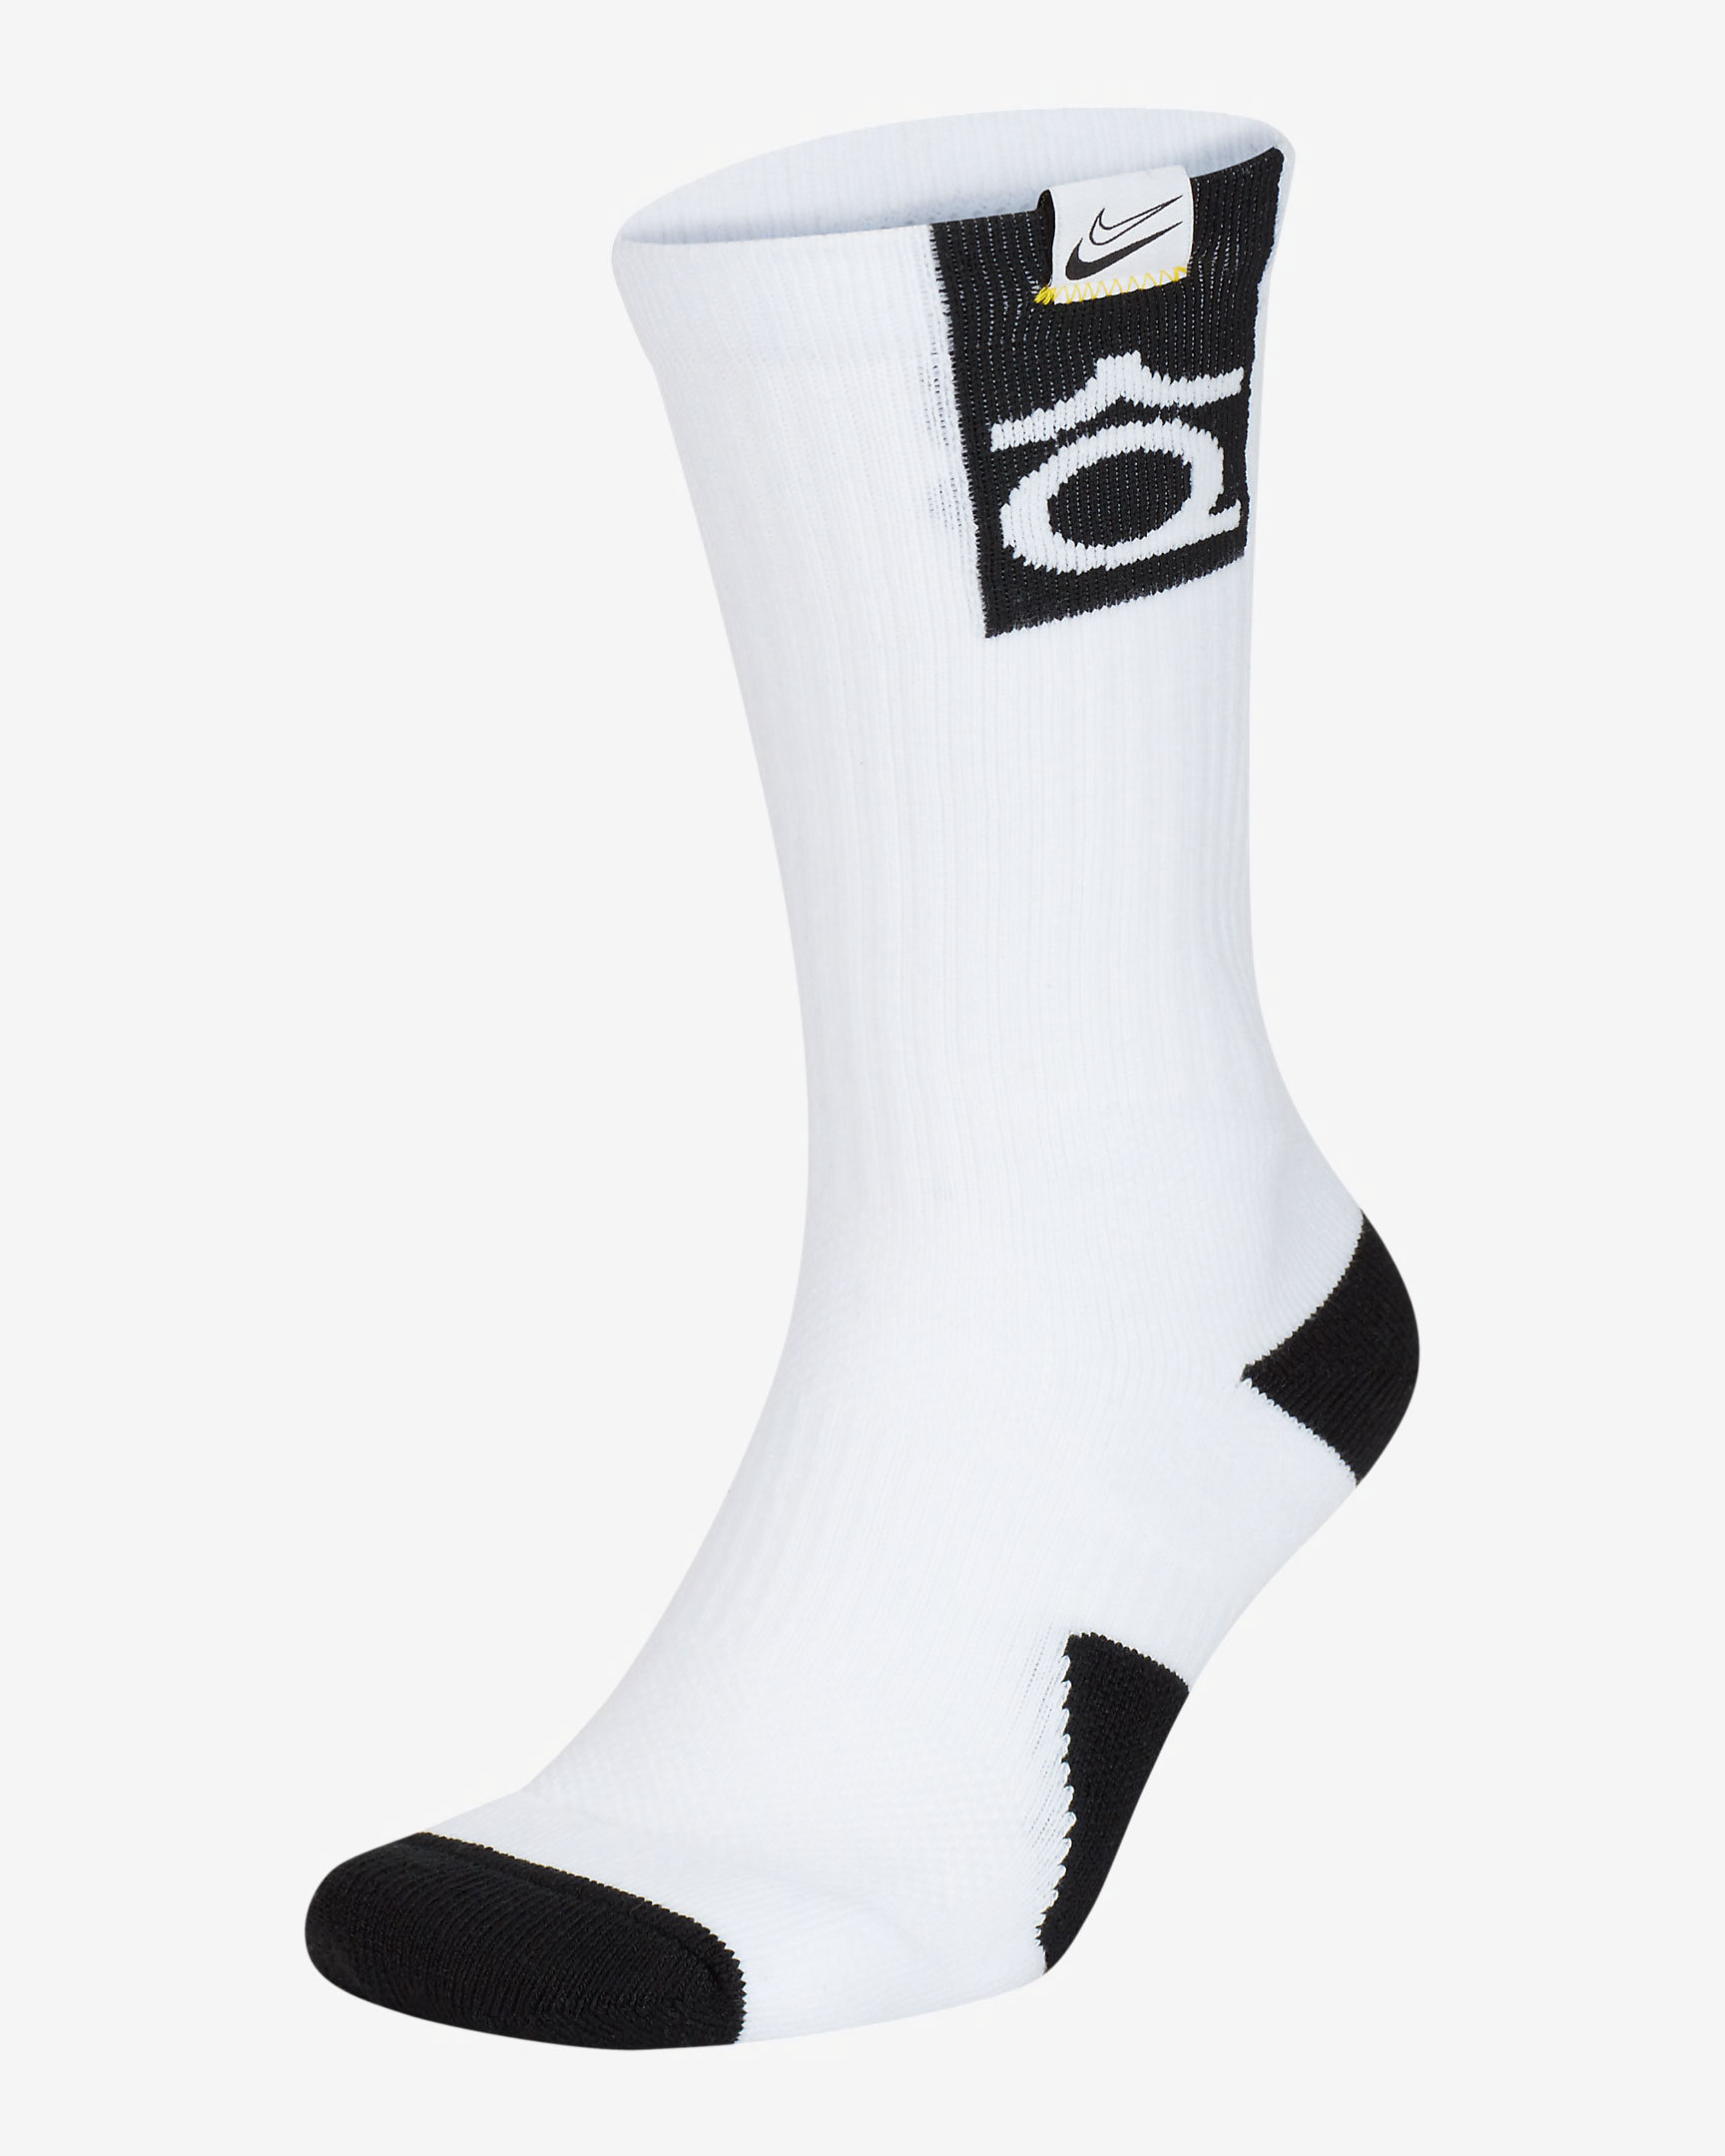 nike-kd-13-black-white-socks-2